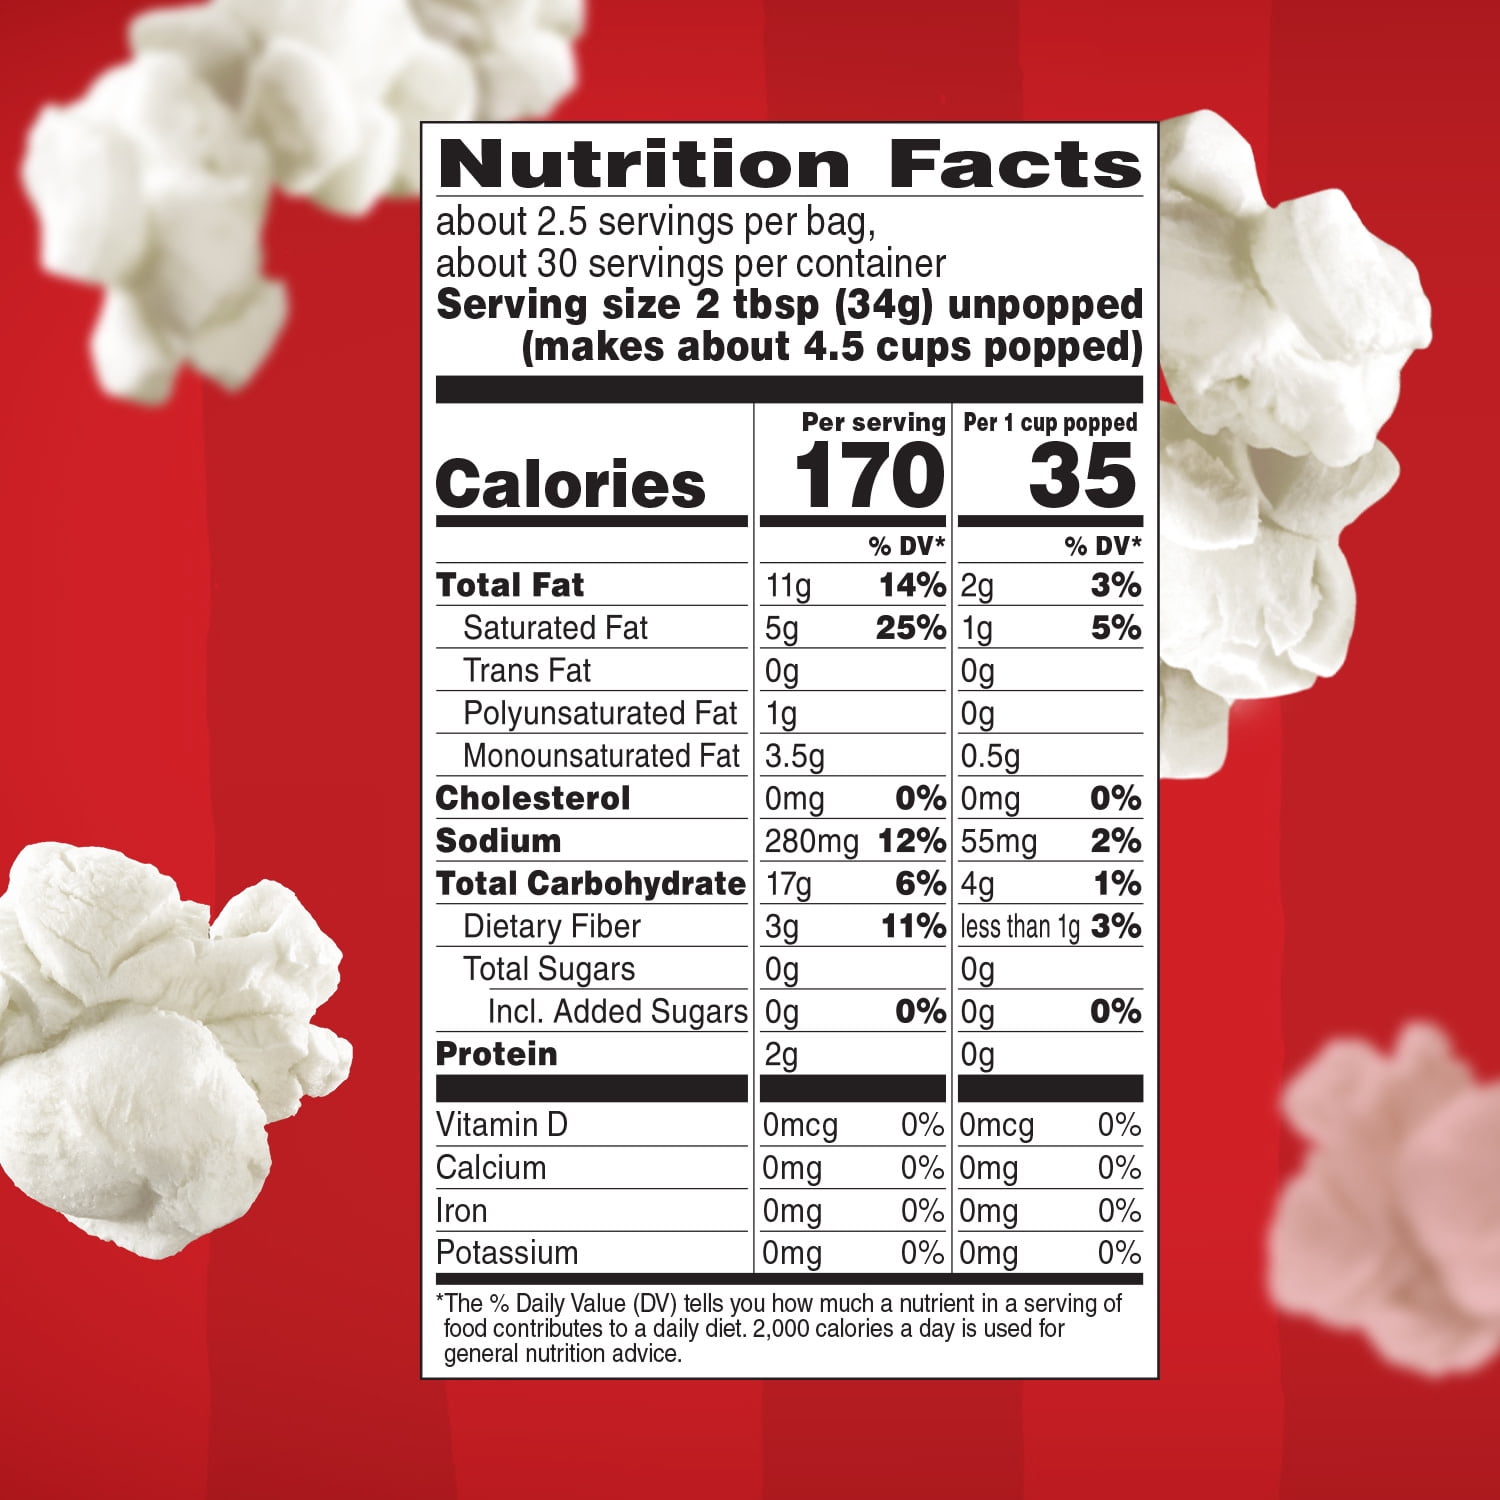 orville redenbacher tender white popcorn calories